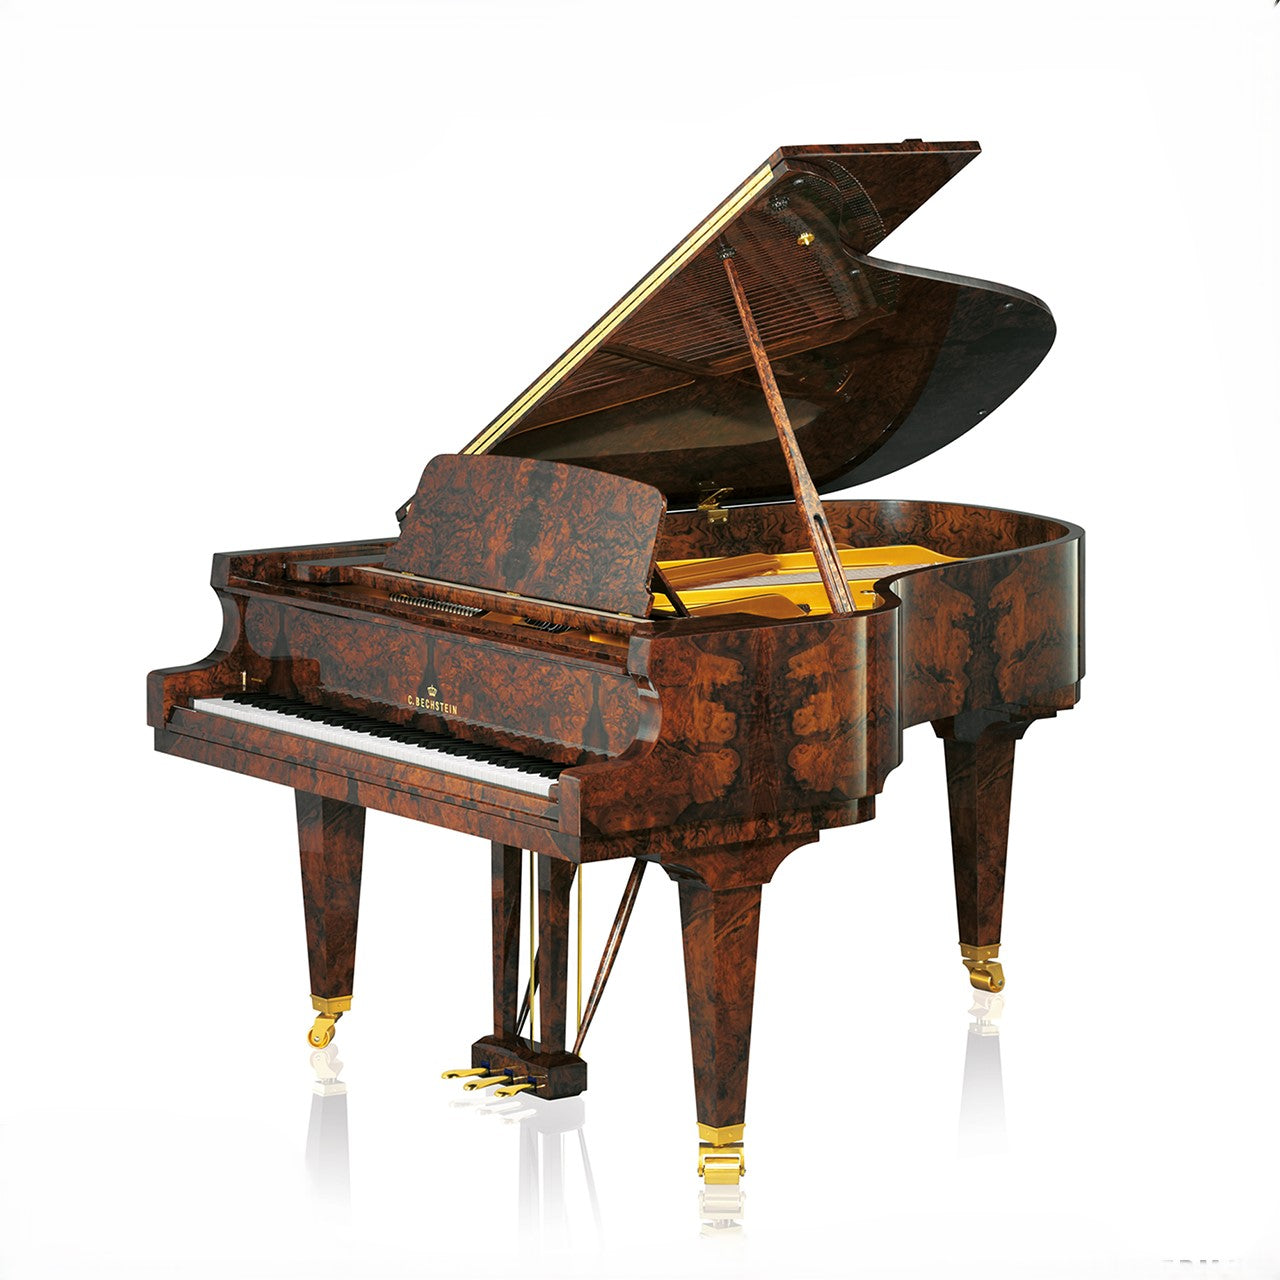 Grand Piano C.Bechstein Academy A190 - Việt Music